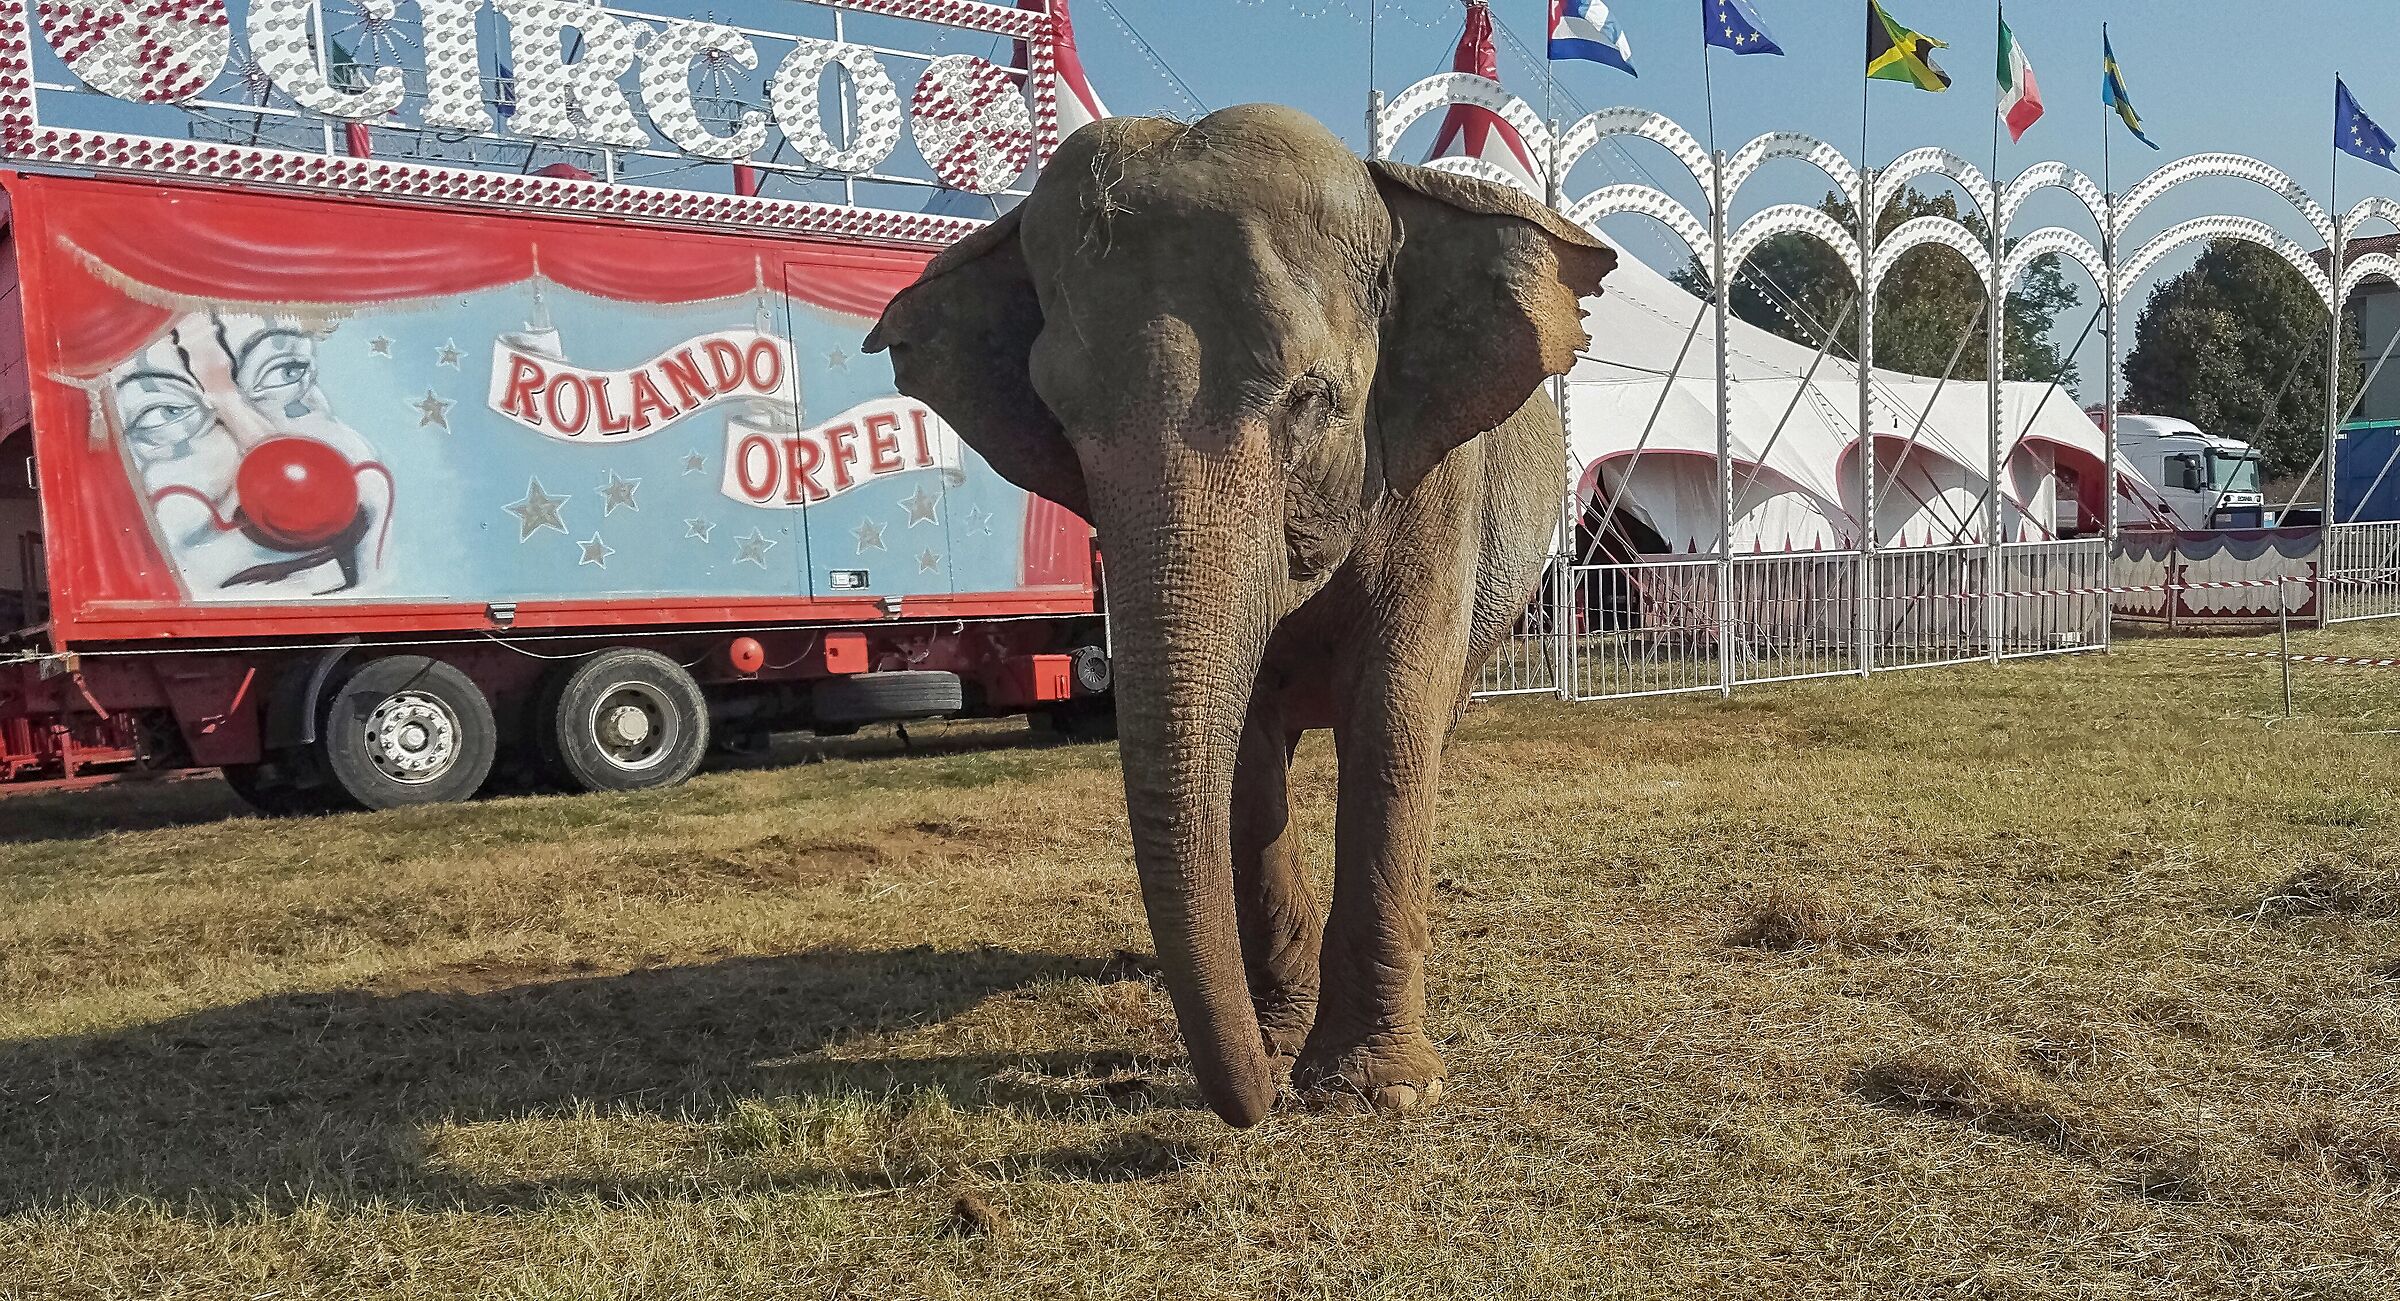 elephant circus orlando orfei made with honor 7 4/10/18...